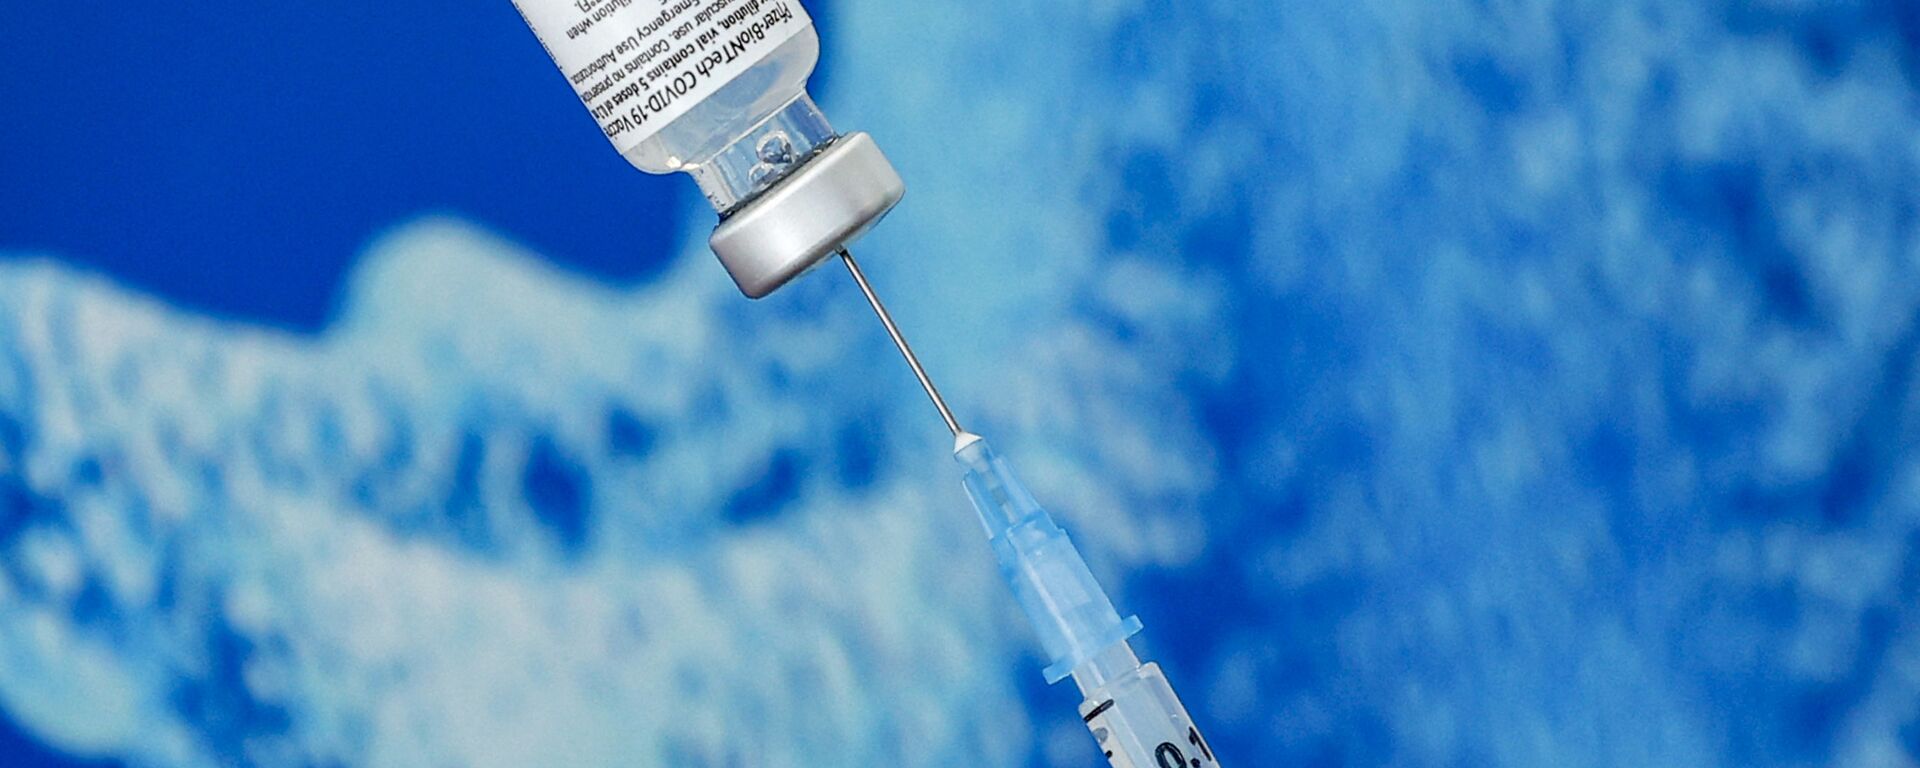 A health worker prepares a dose of the Pfizer-BioNtech COVID-19 coronavirus vaccine at Clalit Health Services, in Israel's Mediterranean coastal city of Tel Aviv on January 23, 2021. - Sputnik International, 1920, 11.04.2021